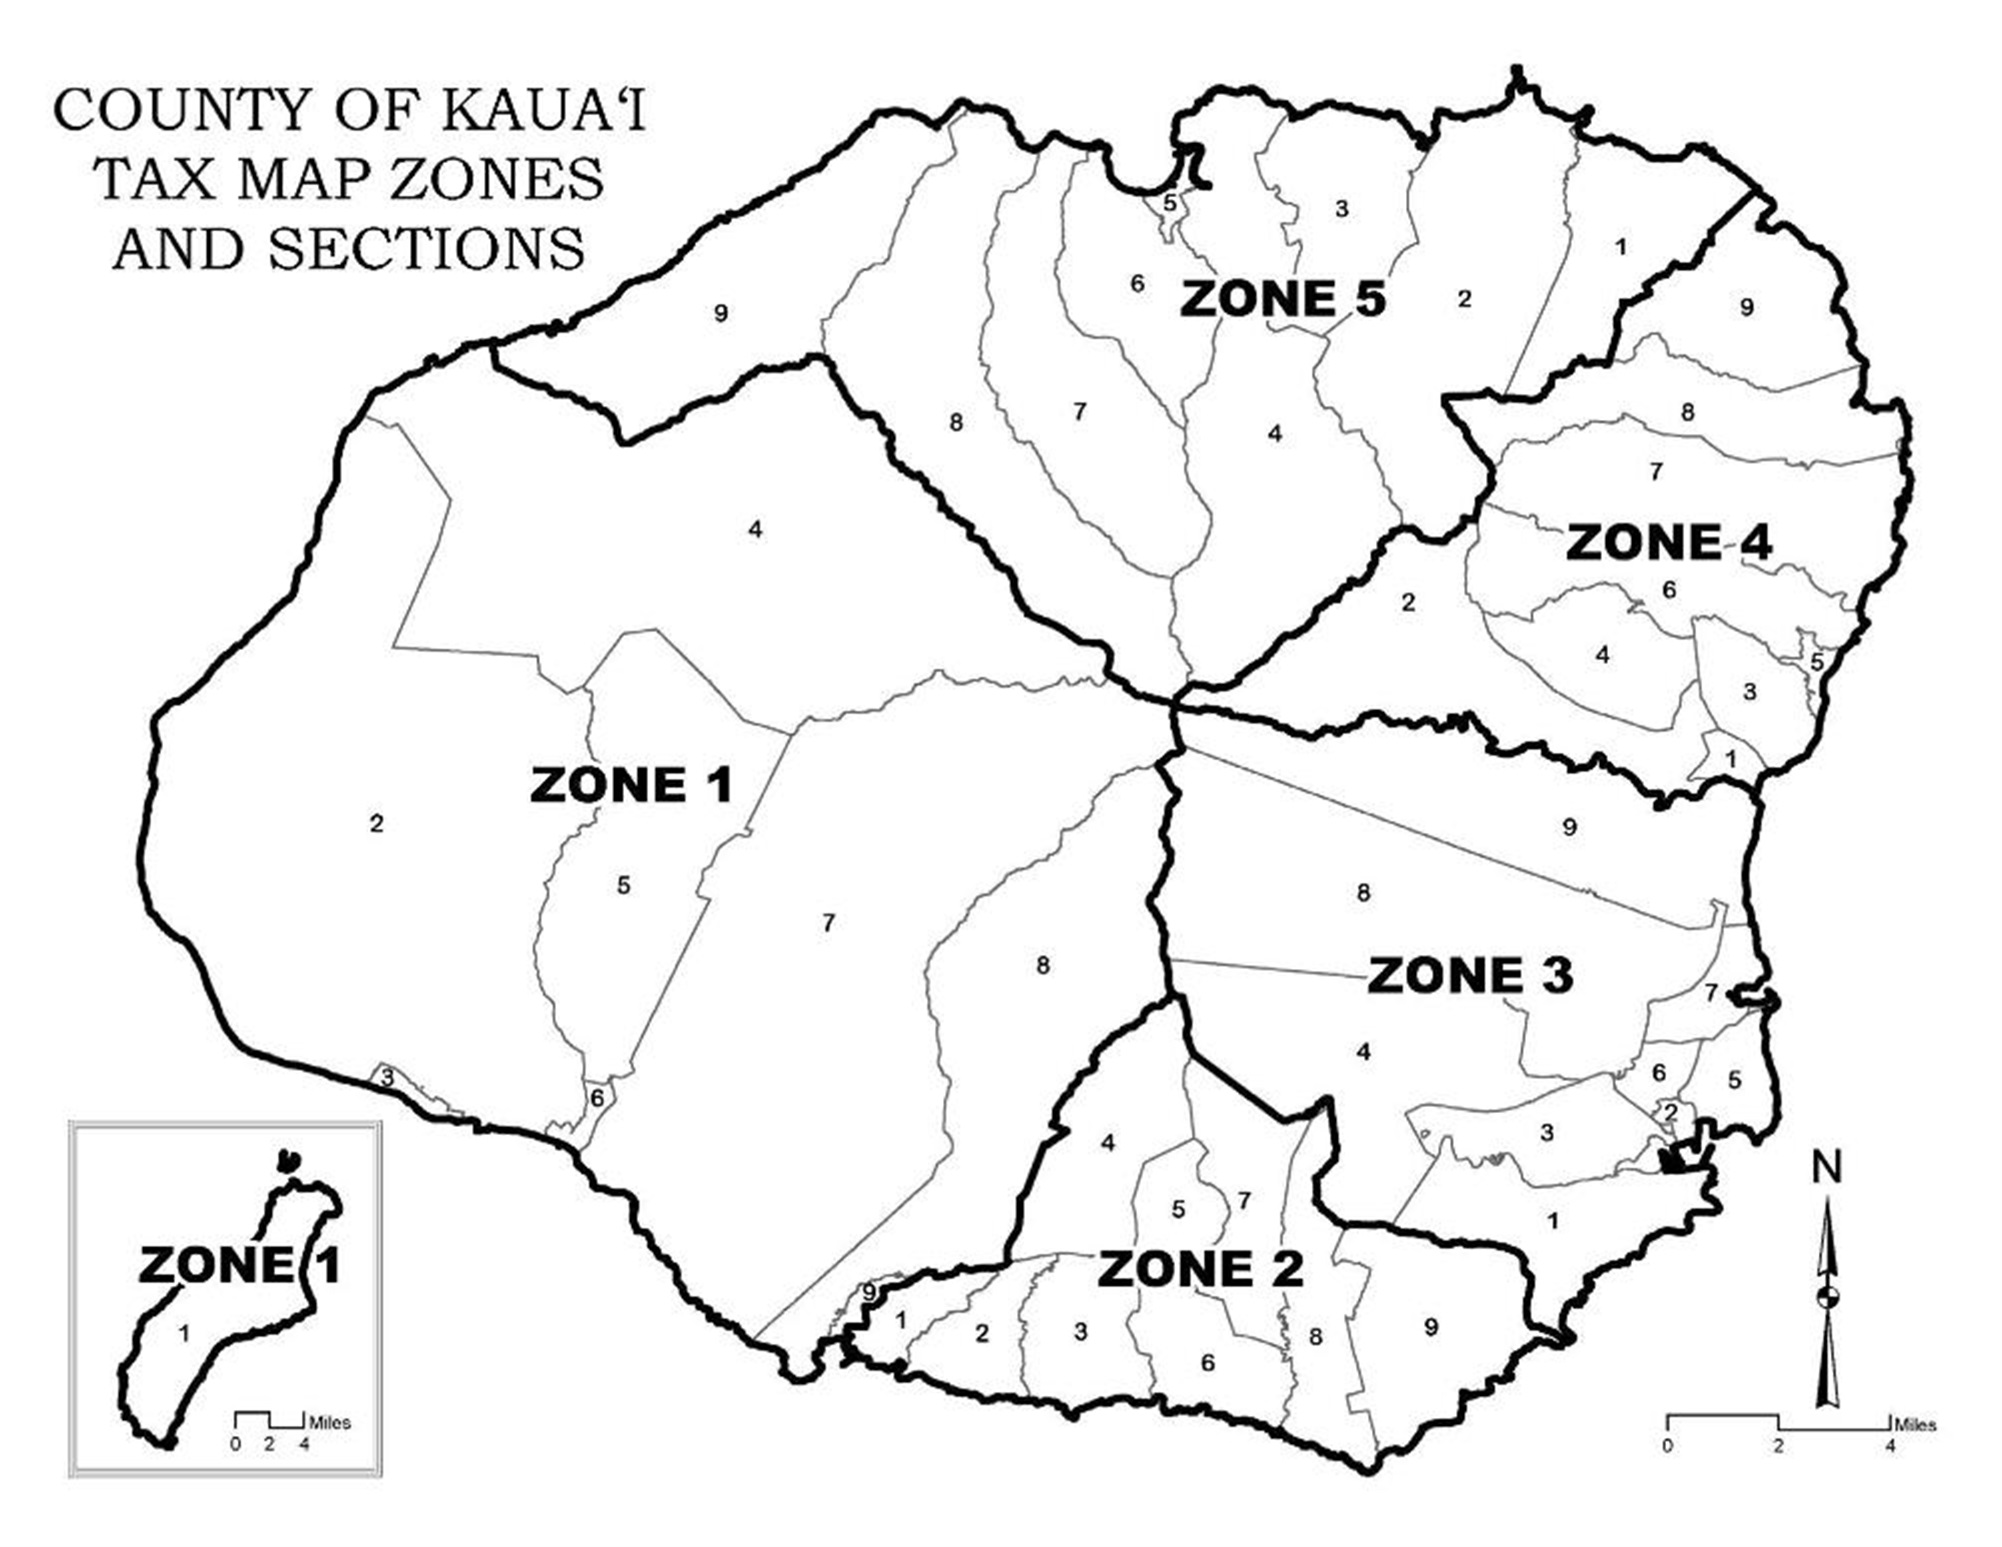 5-Zone Map of Kauai